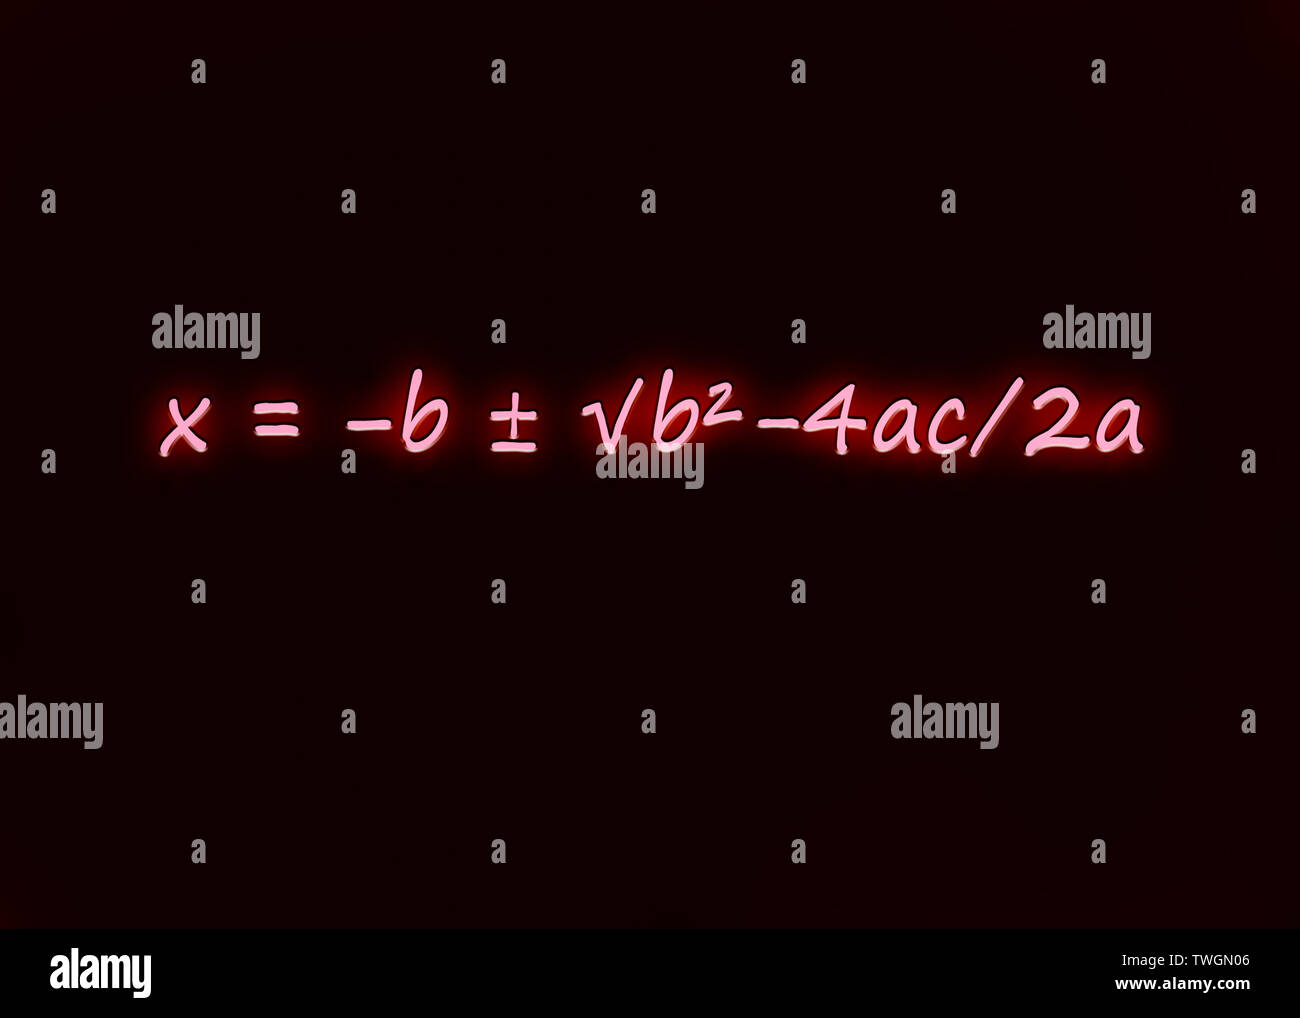 Quadratic Formula written in neon style Stock Photo